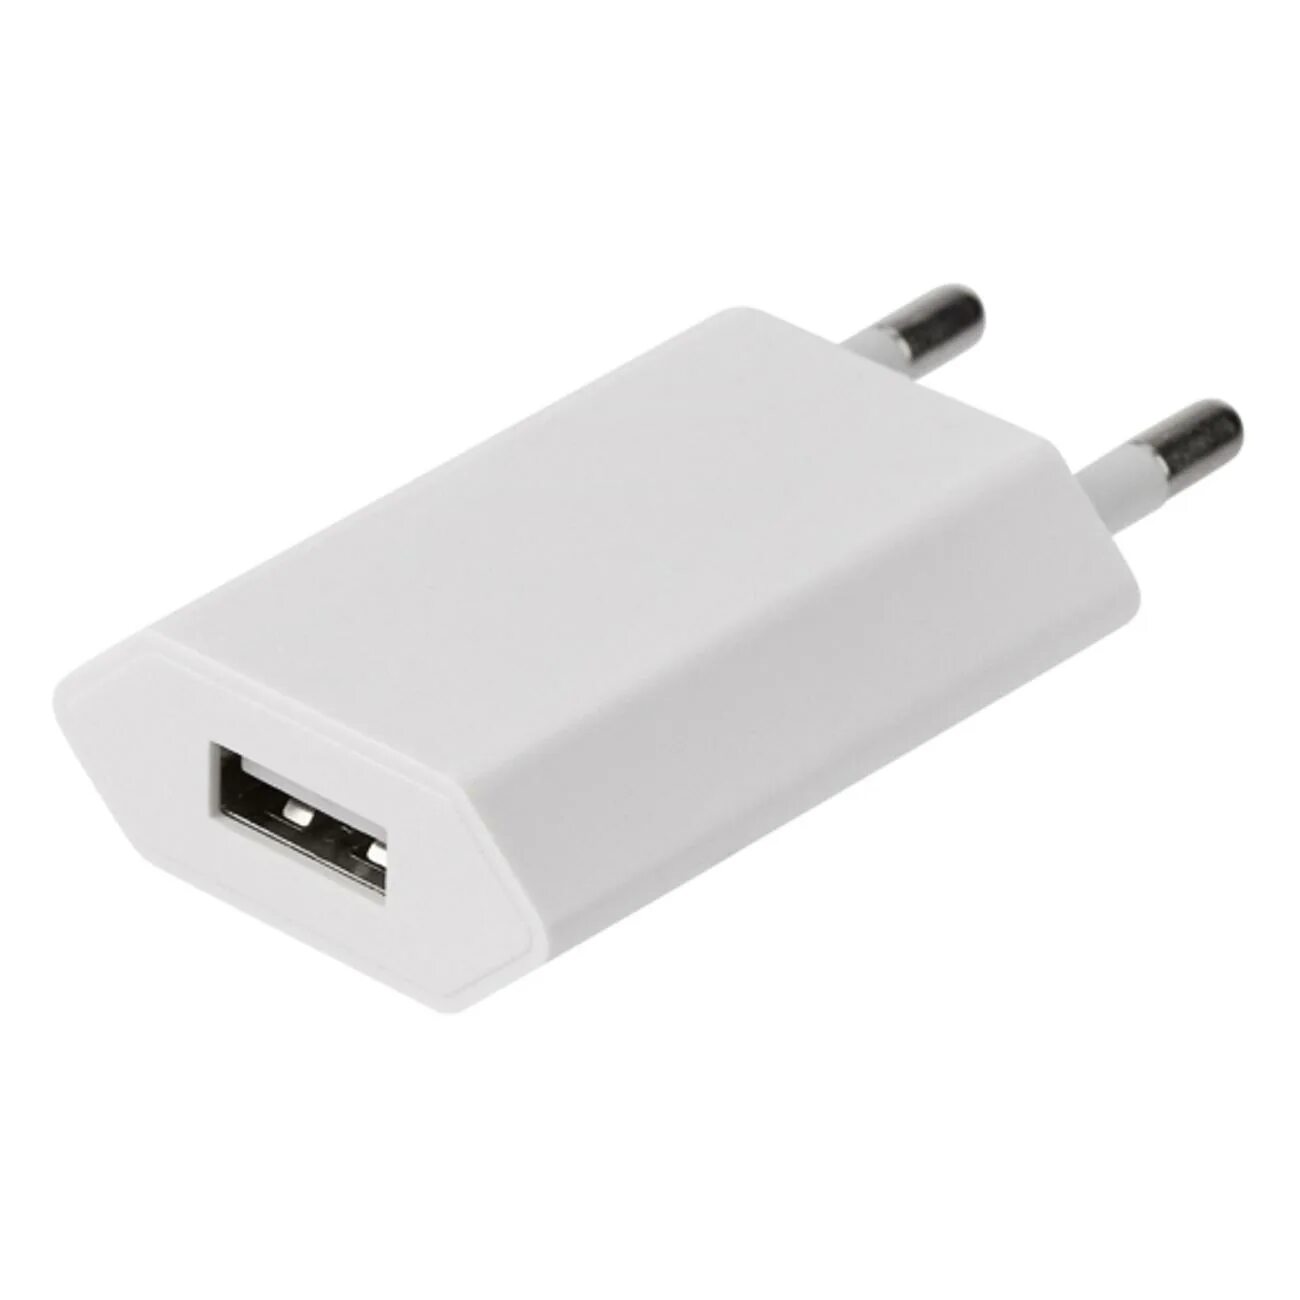 Зарядка 1 ампер. Apple 5w USB Power Adapter. Сетевая зарядка Apple md813zm/a. Эппл зарядка 1 ампер. СЗУ Apple 5w.